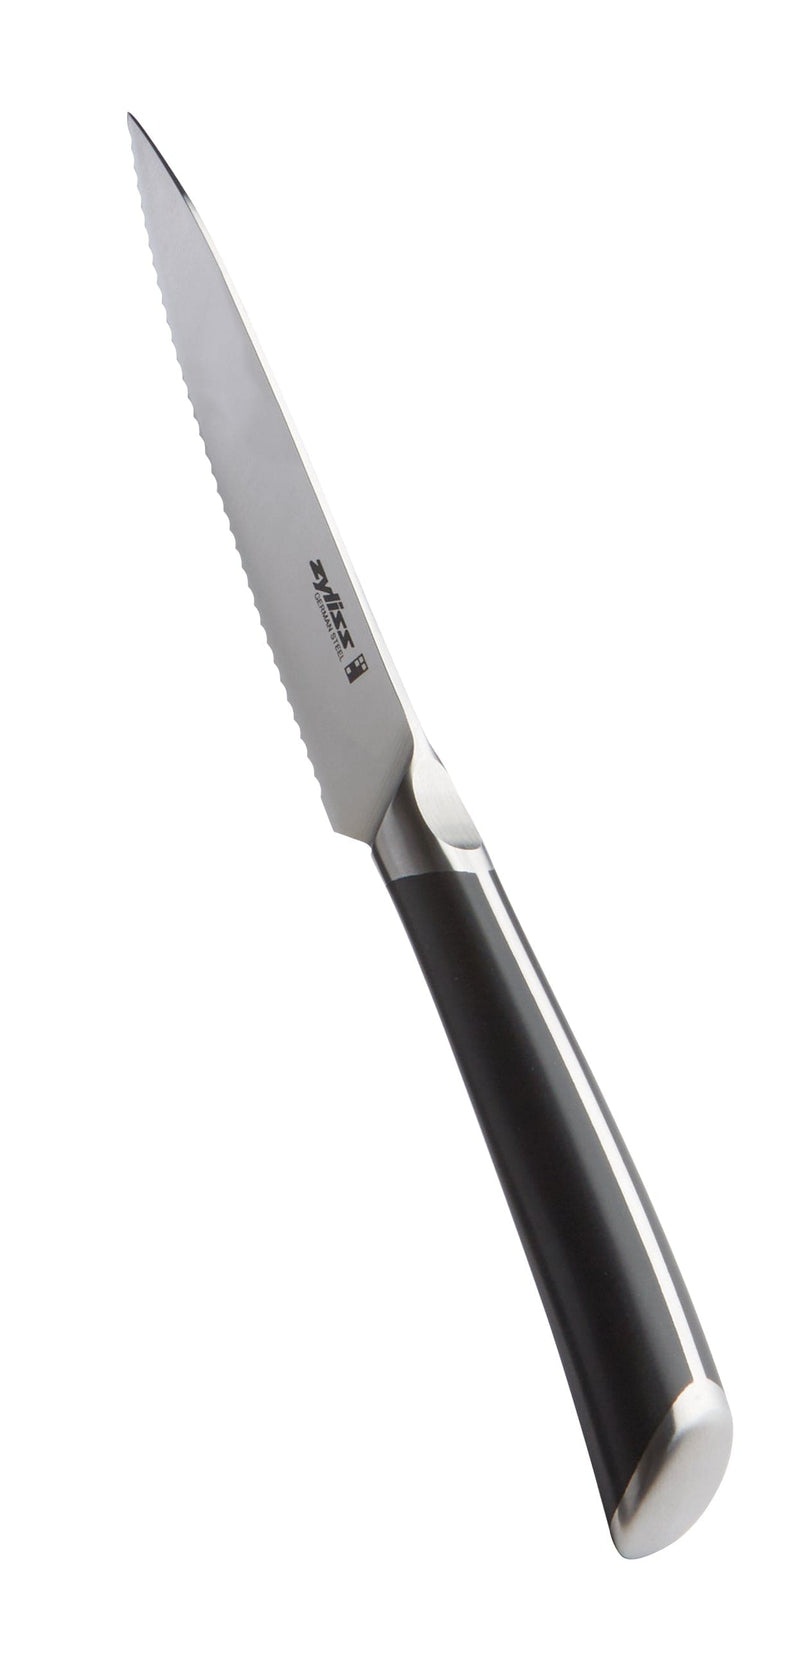 Zyliss Comfort Pro Paring Knife 4.5 inch – Zyliss Kitchen